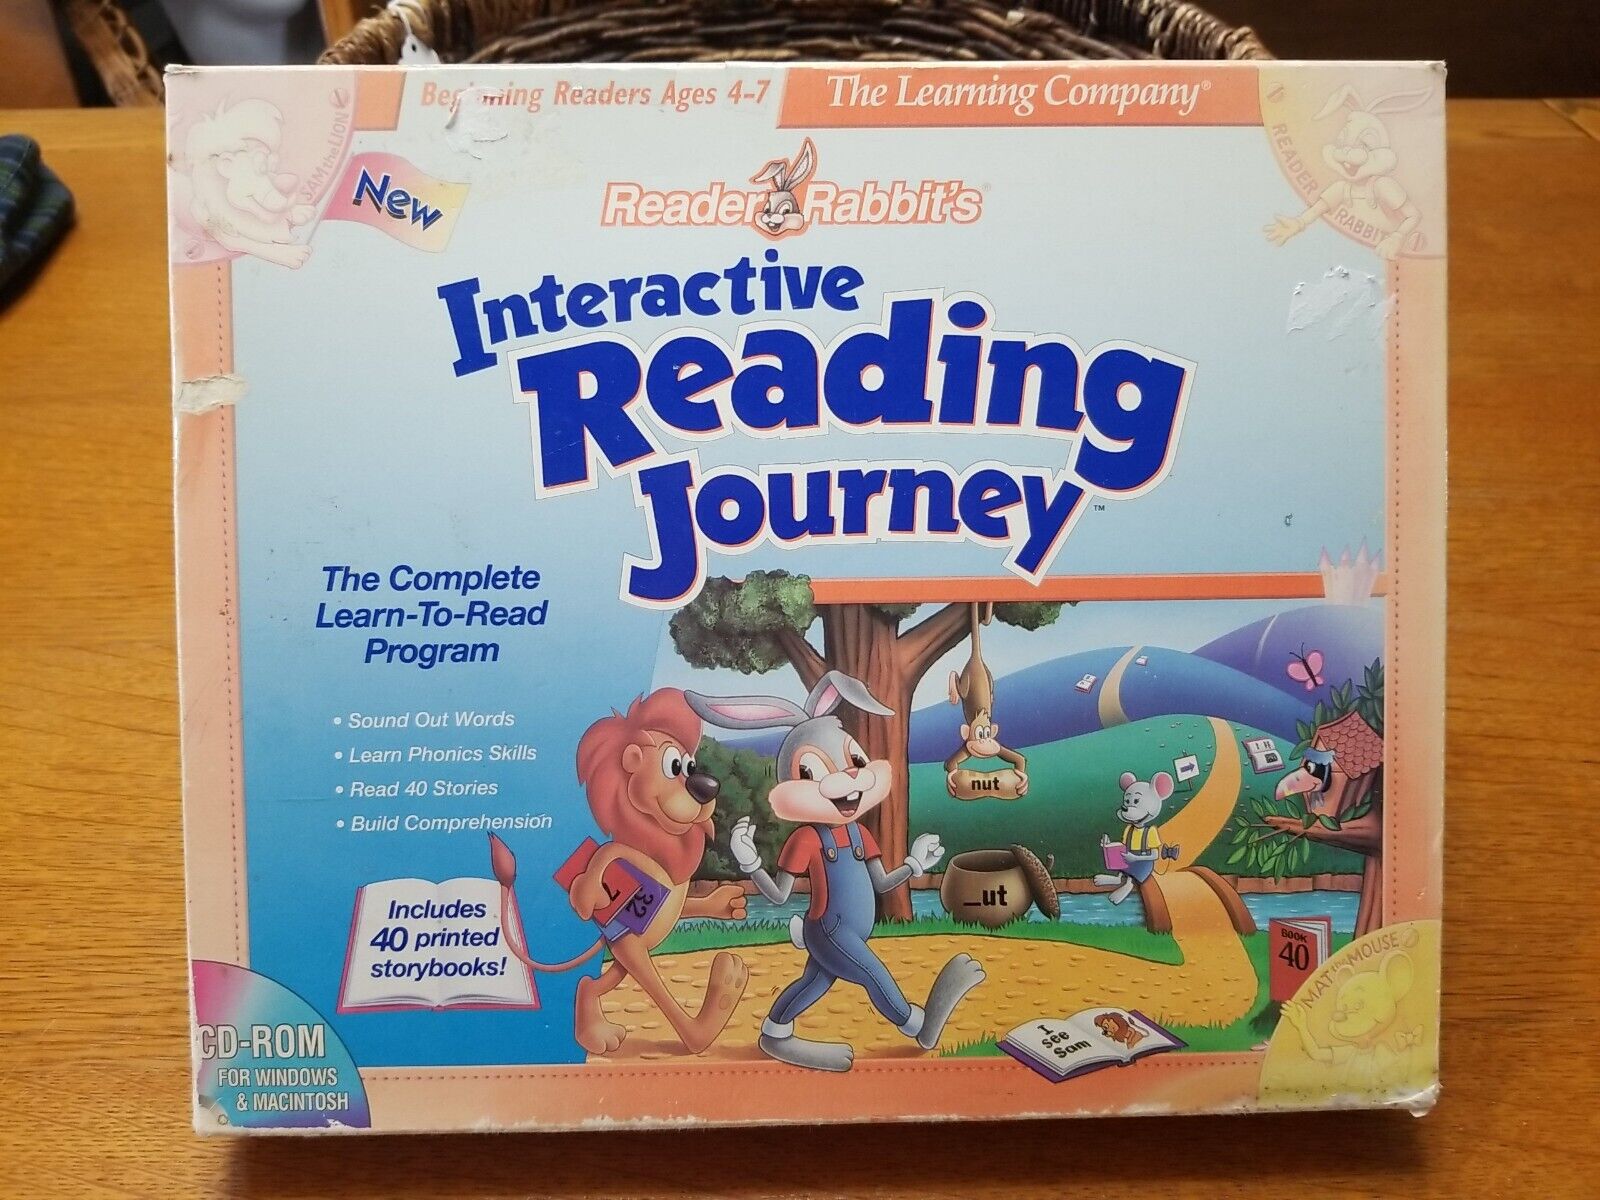 Reader Rabbits Interactive Reading Journey  CD-ROM  Wind Mac 4-7 ORIGINAL - RARE